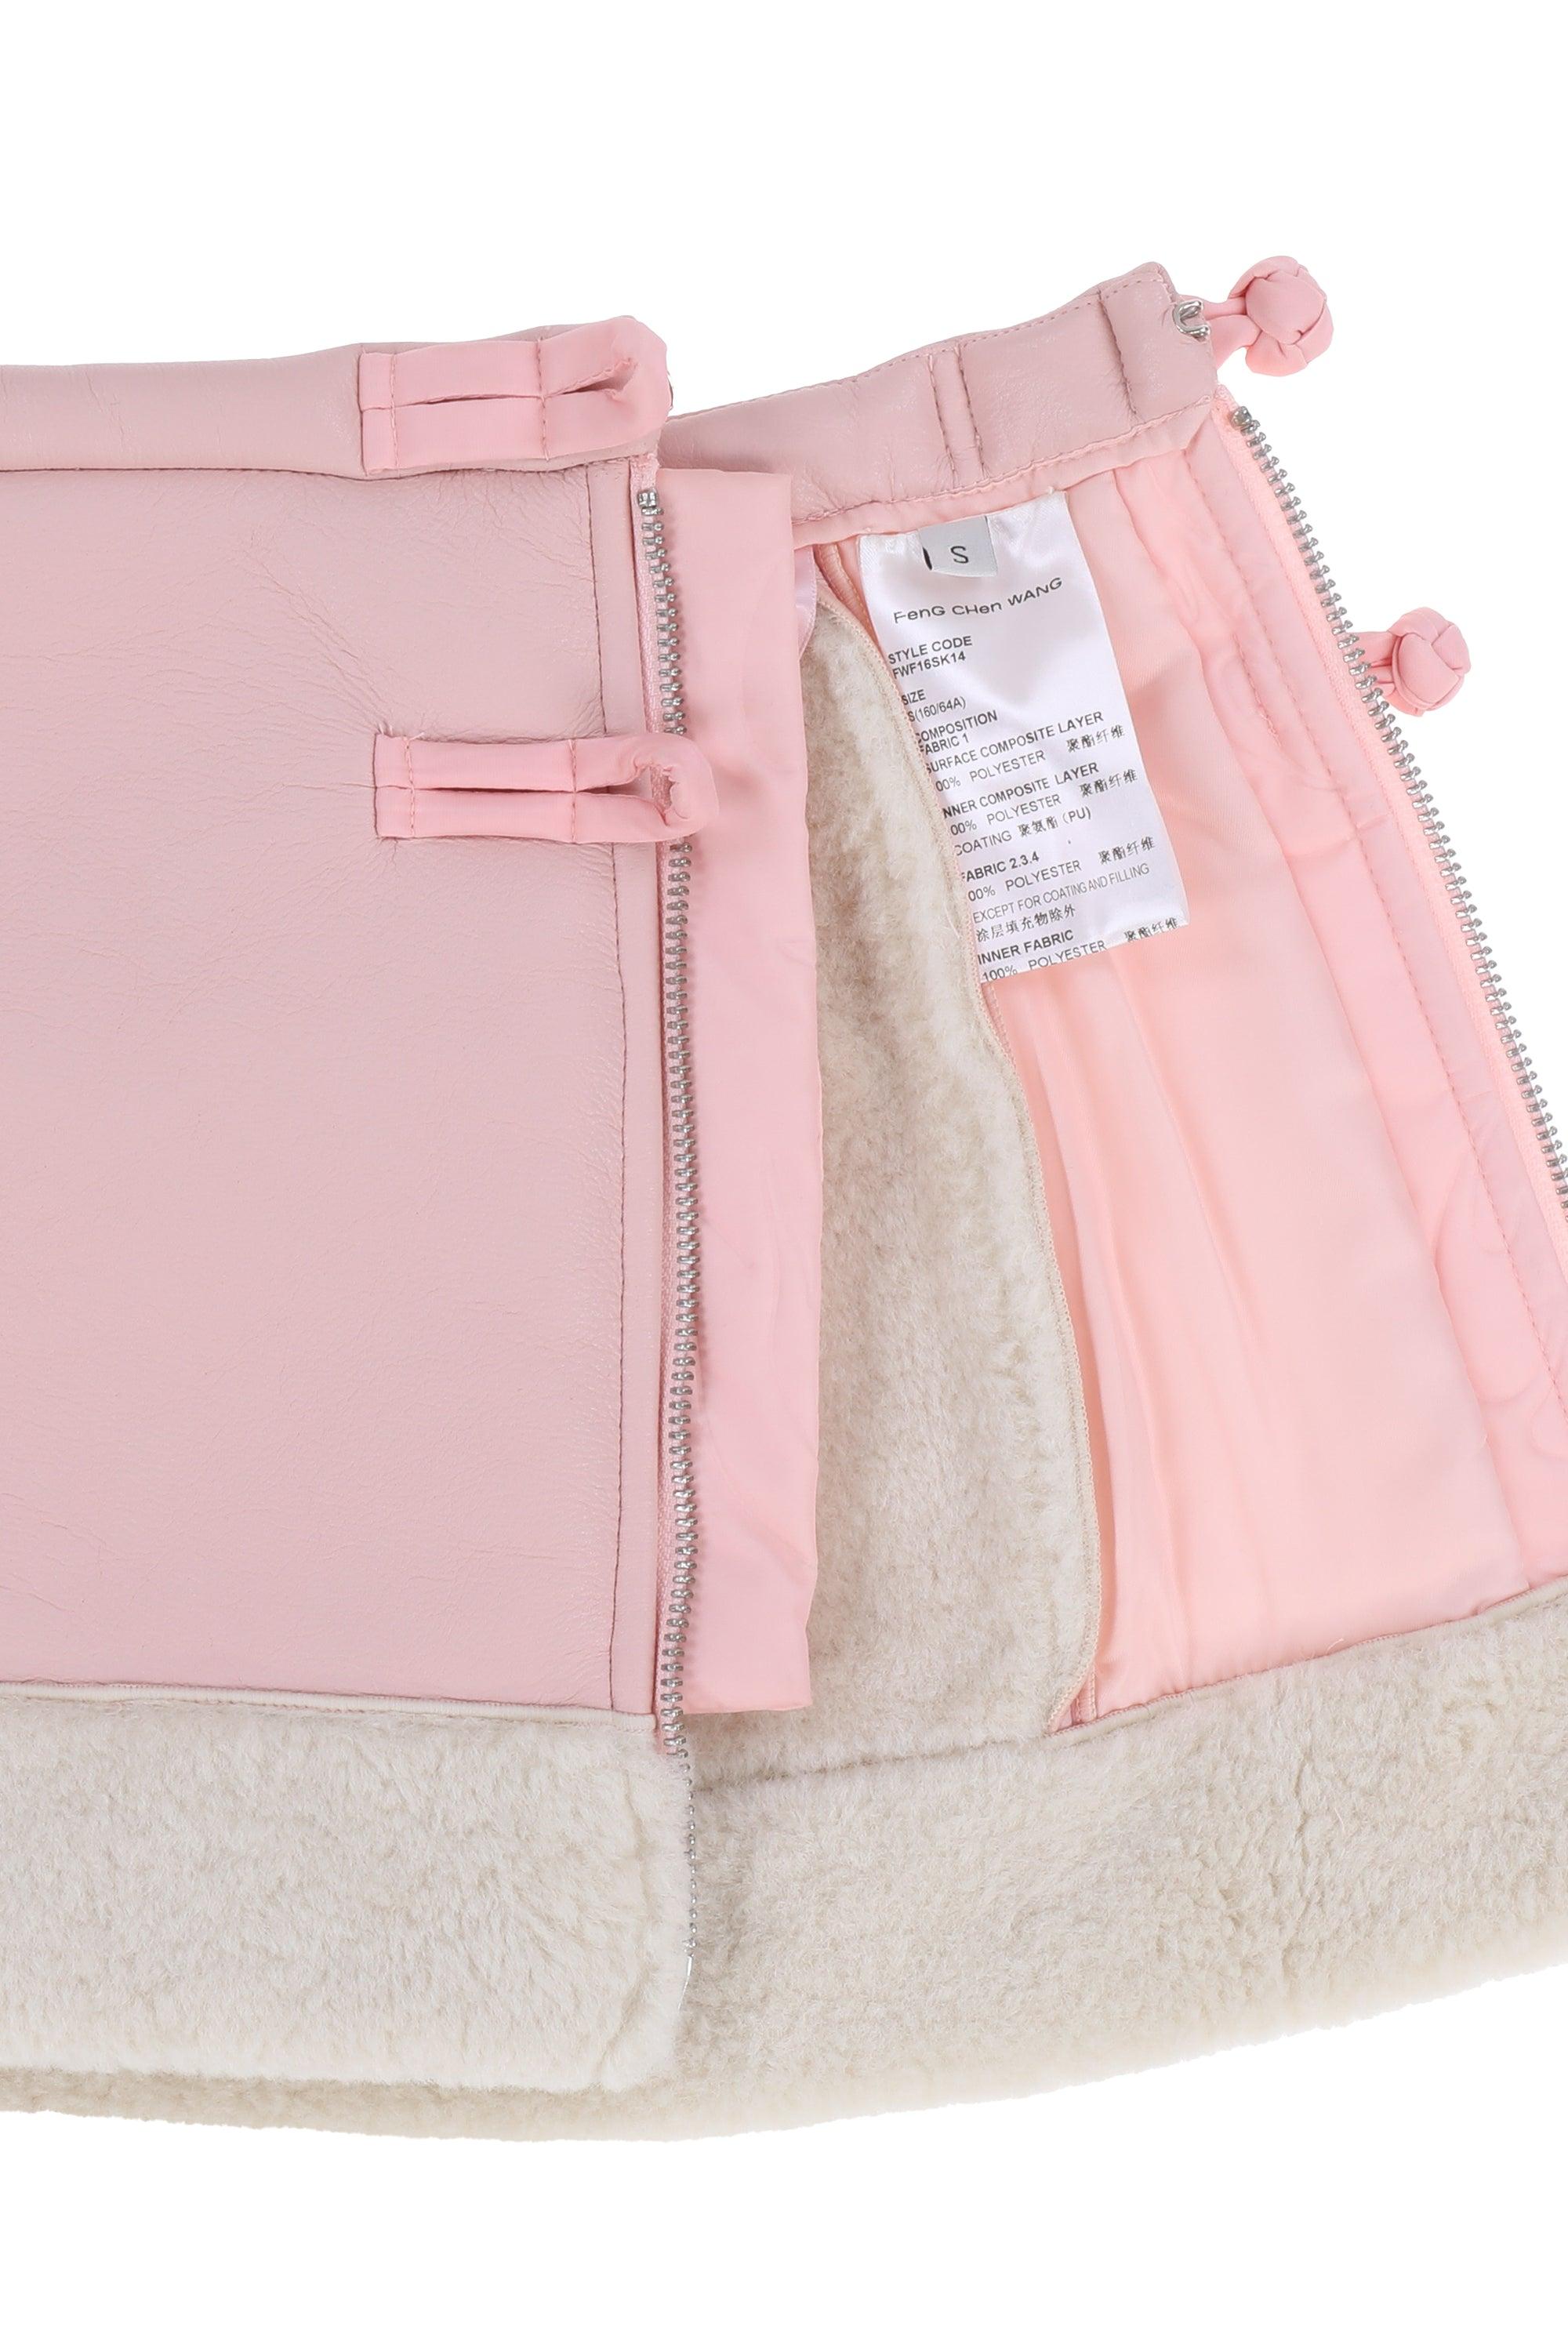 Feng Chen Wang Quilt Pheonix Mini Skirt in Pink | Lyst